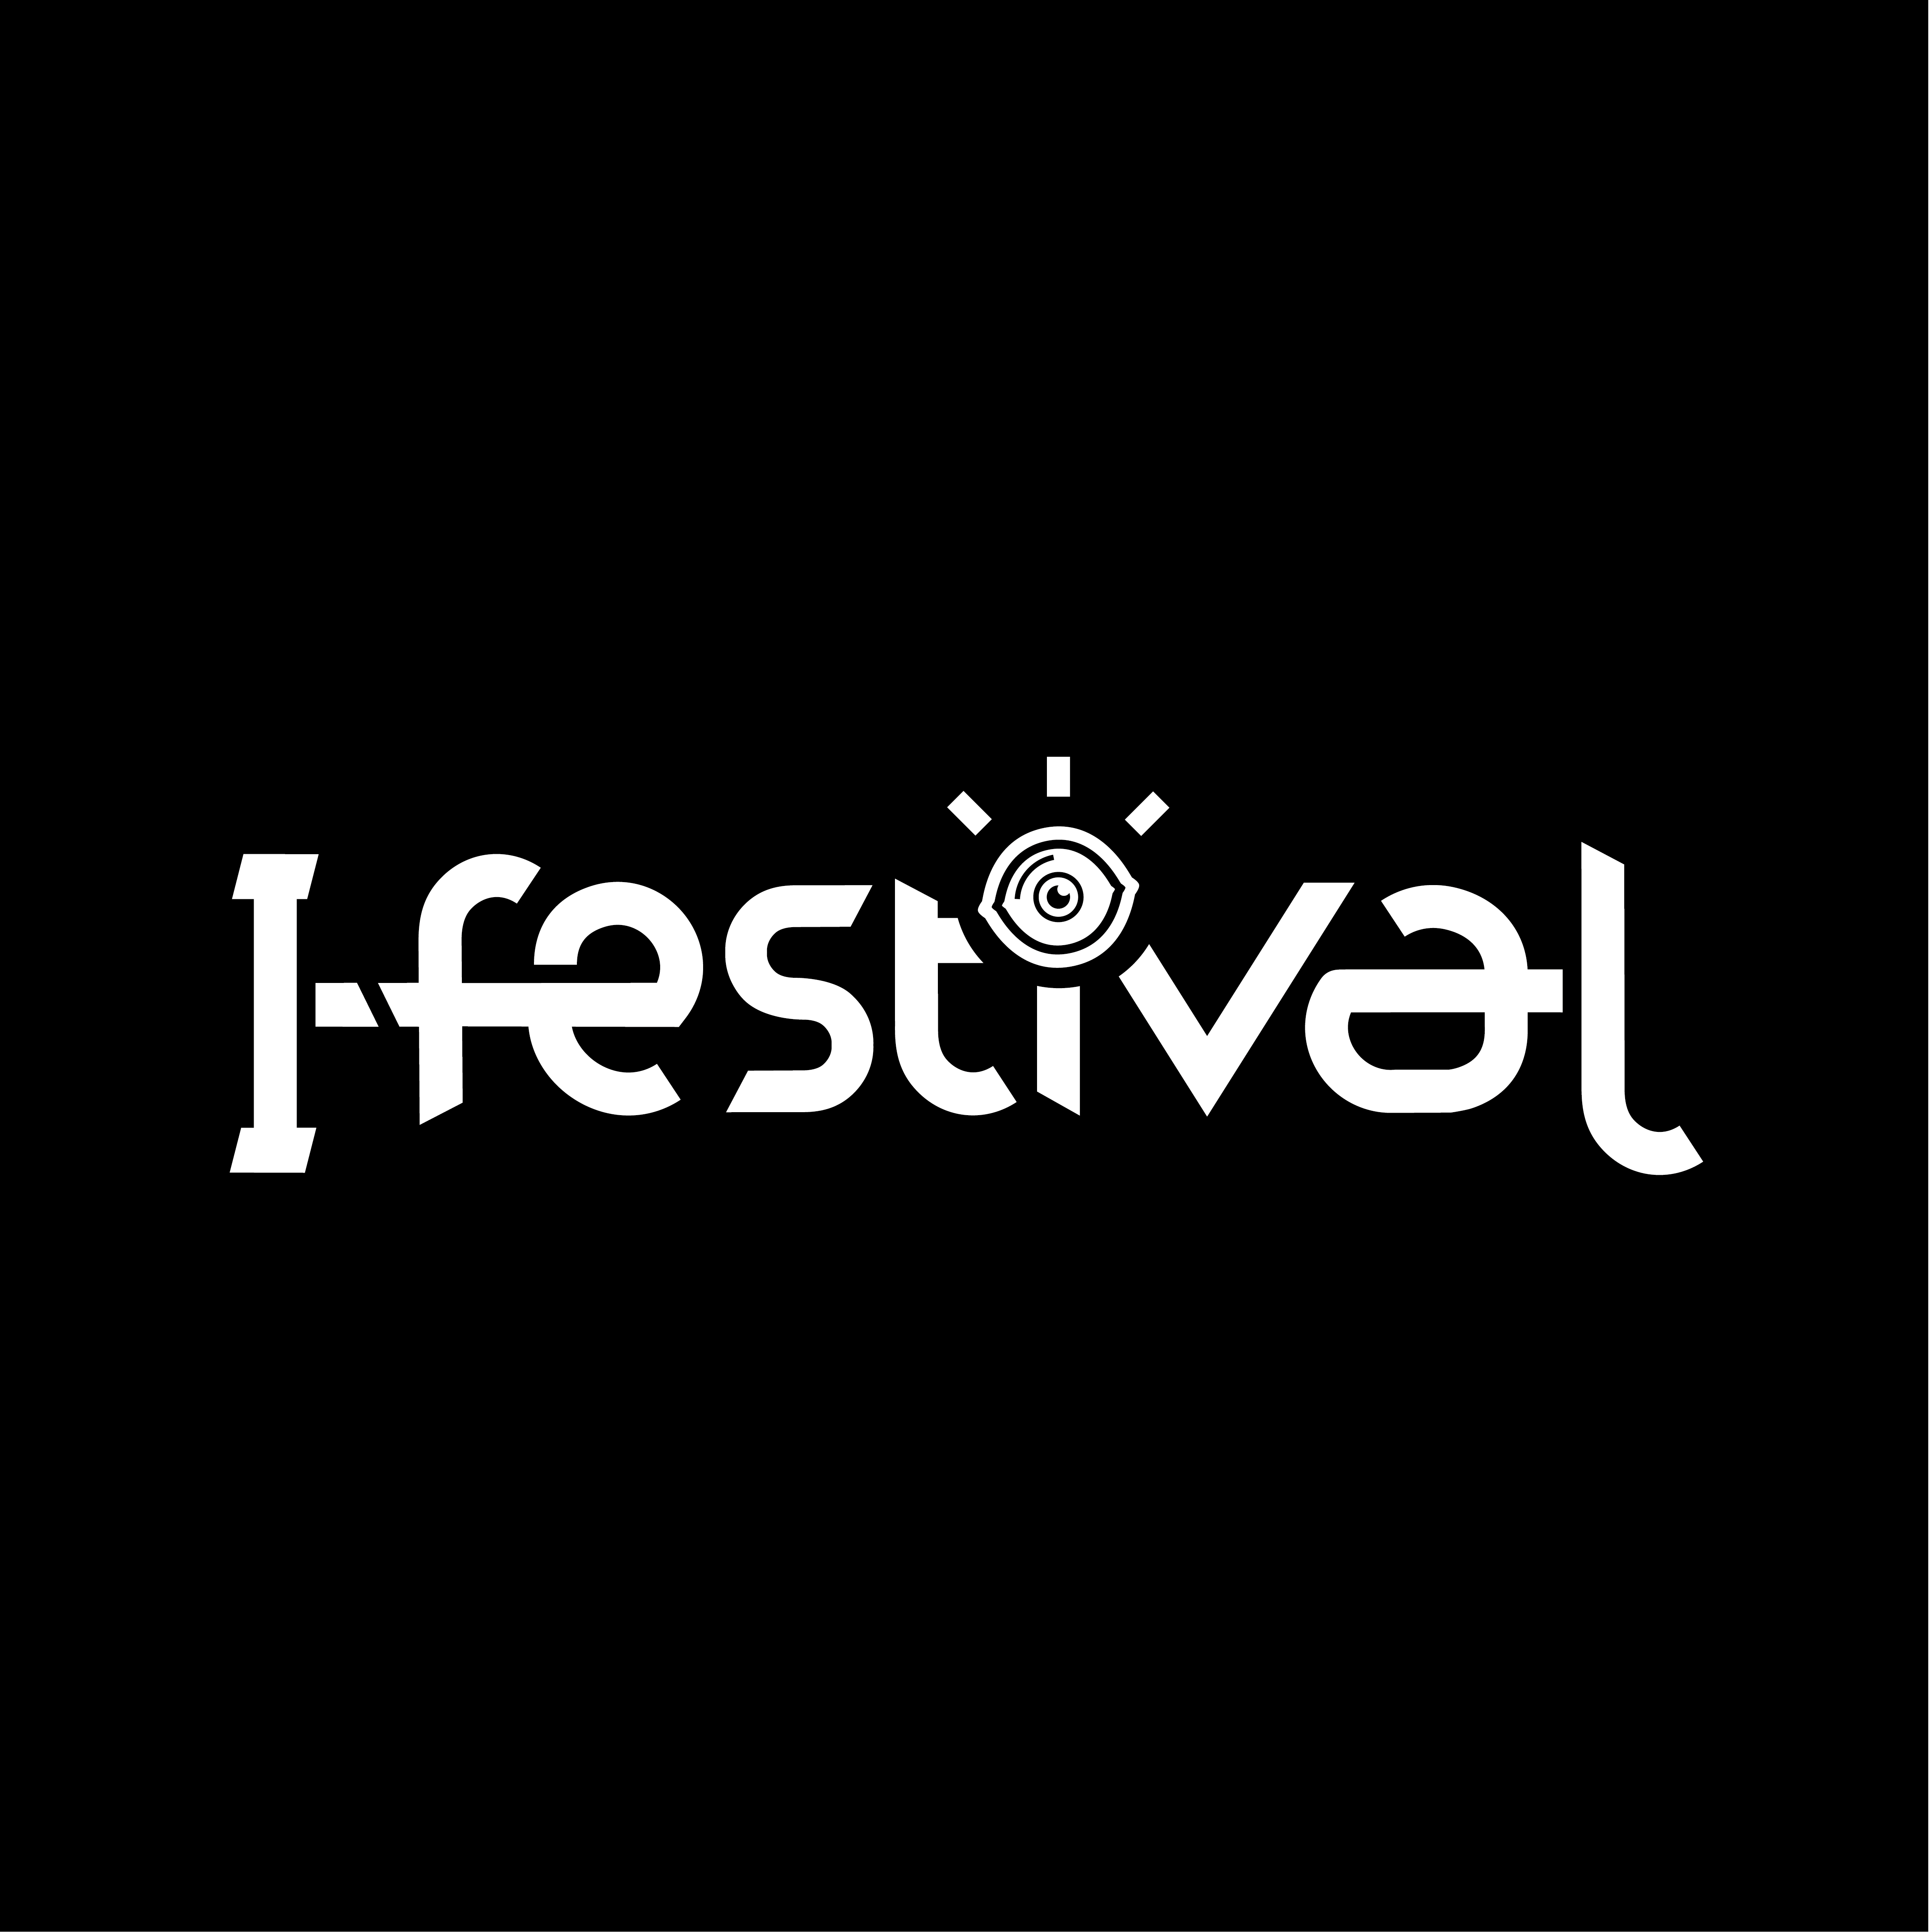 I Festival